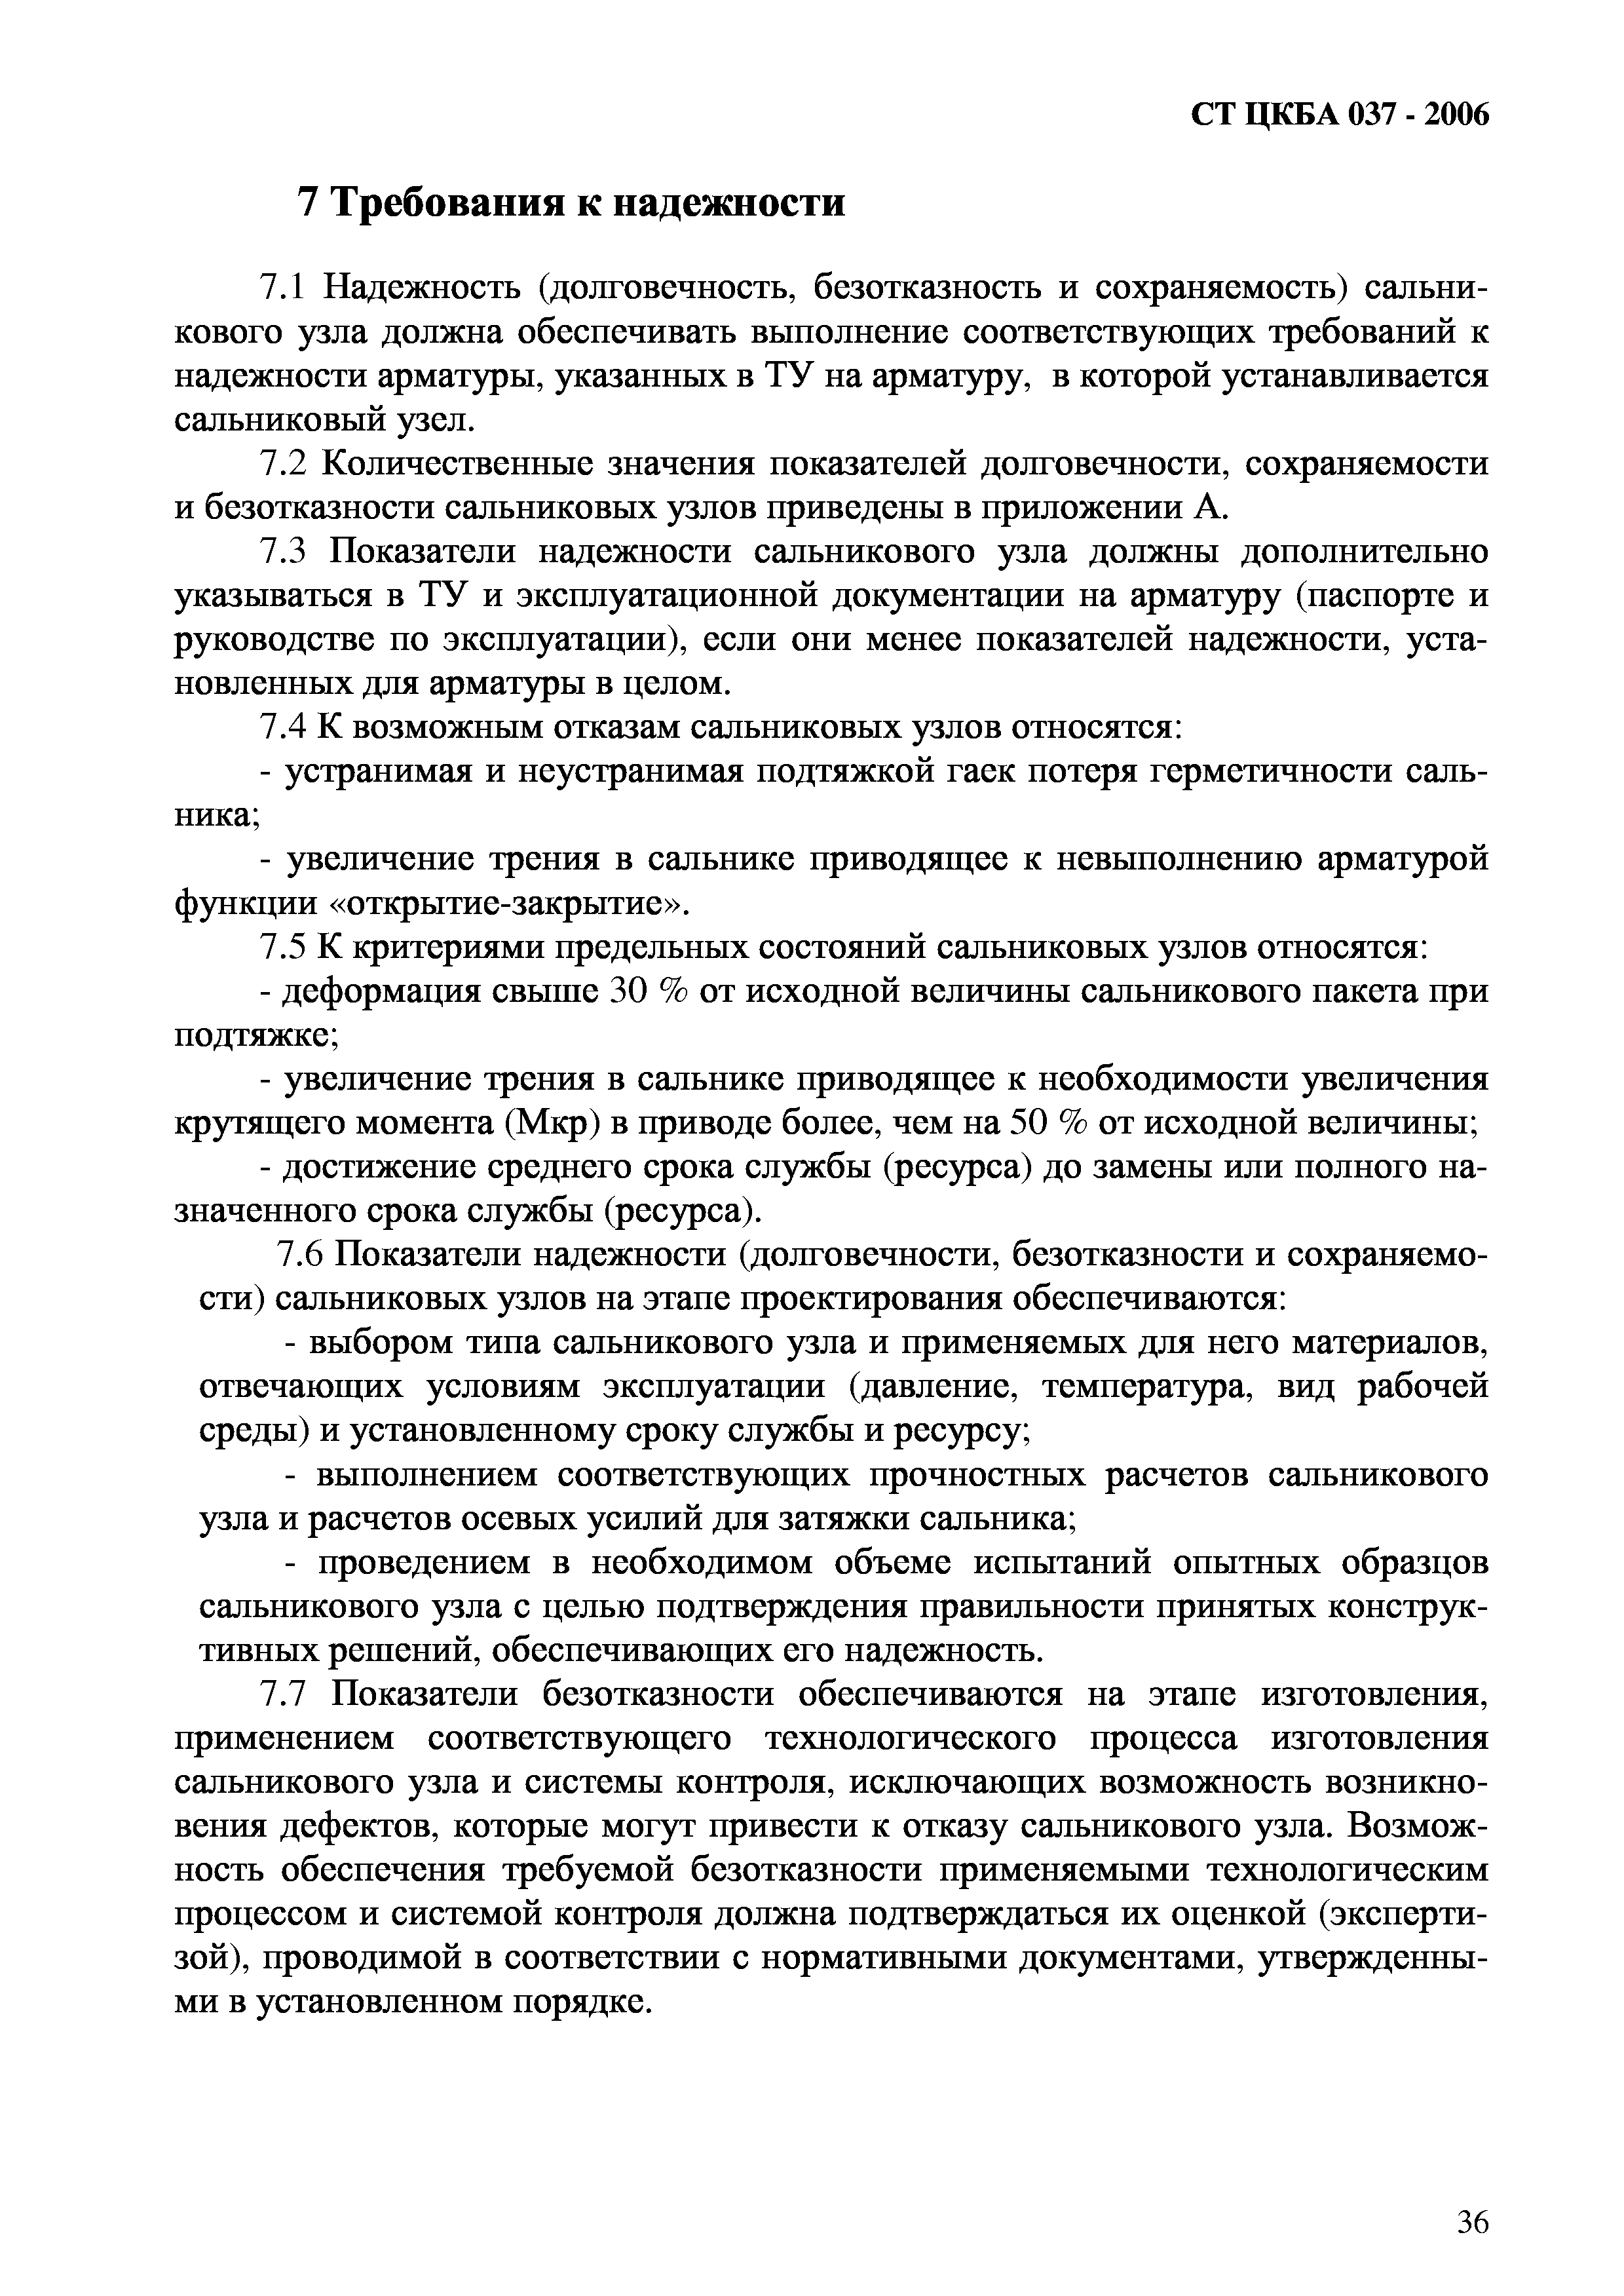 СТ ЦКБА 037-2006